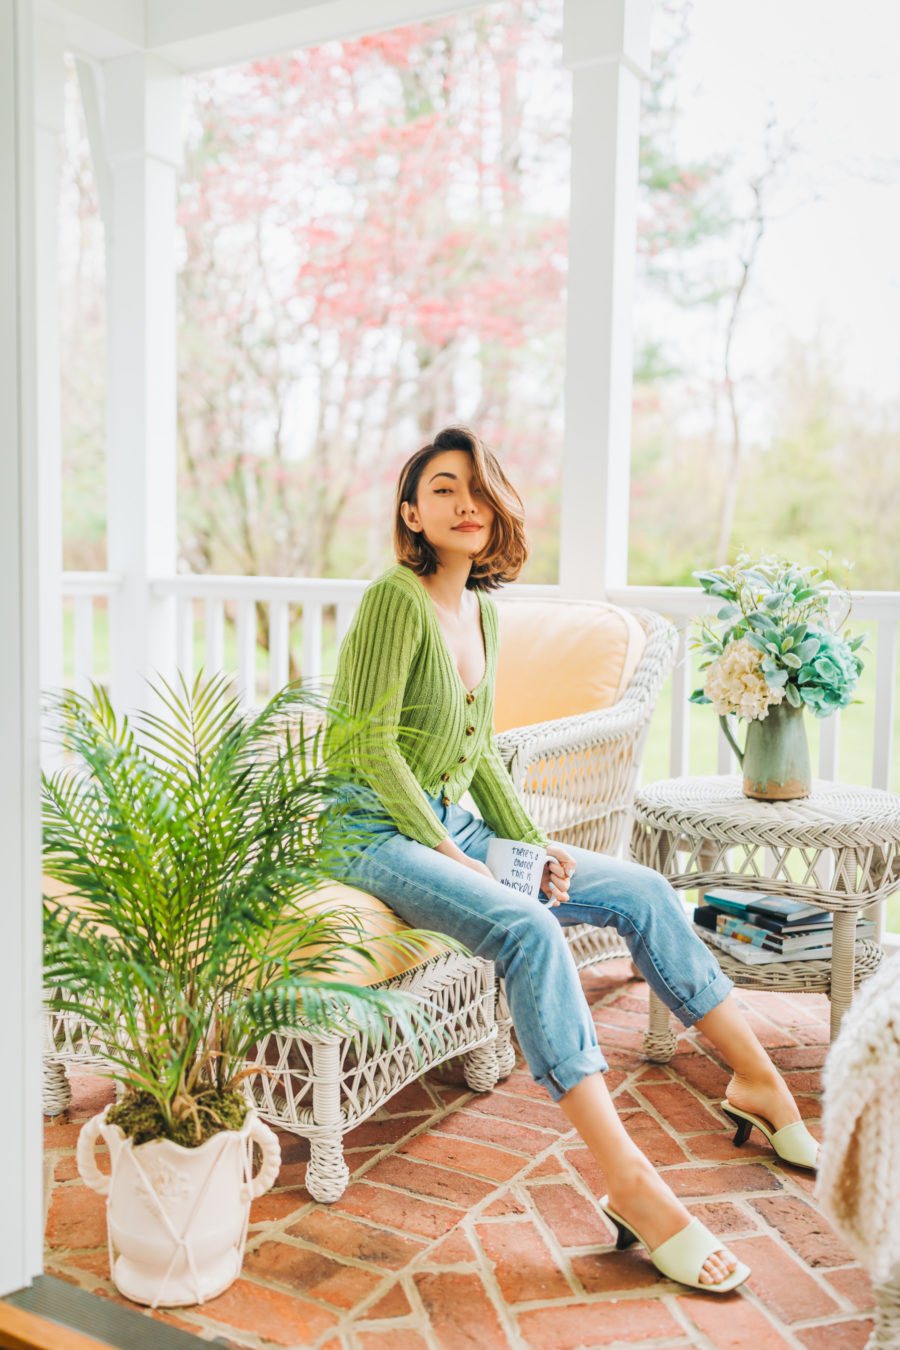 fashion blogger jessica wang shares her self-care guide at home // Jessica Wang -Notjessfashion.com